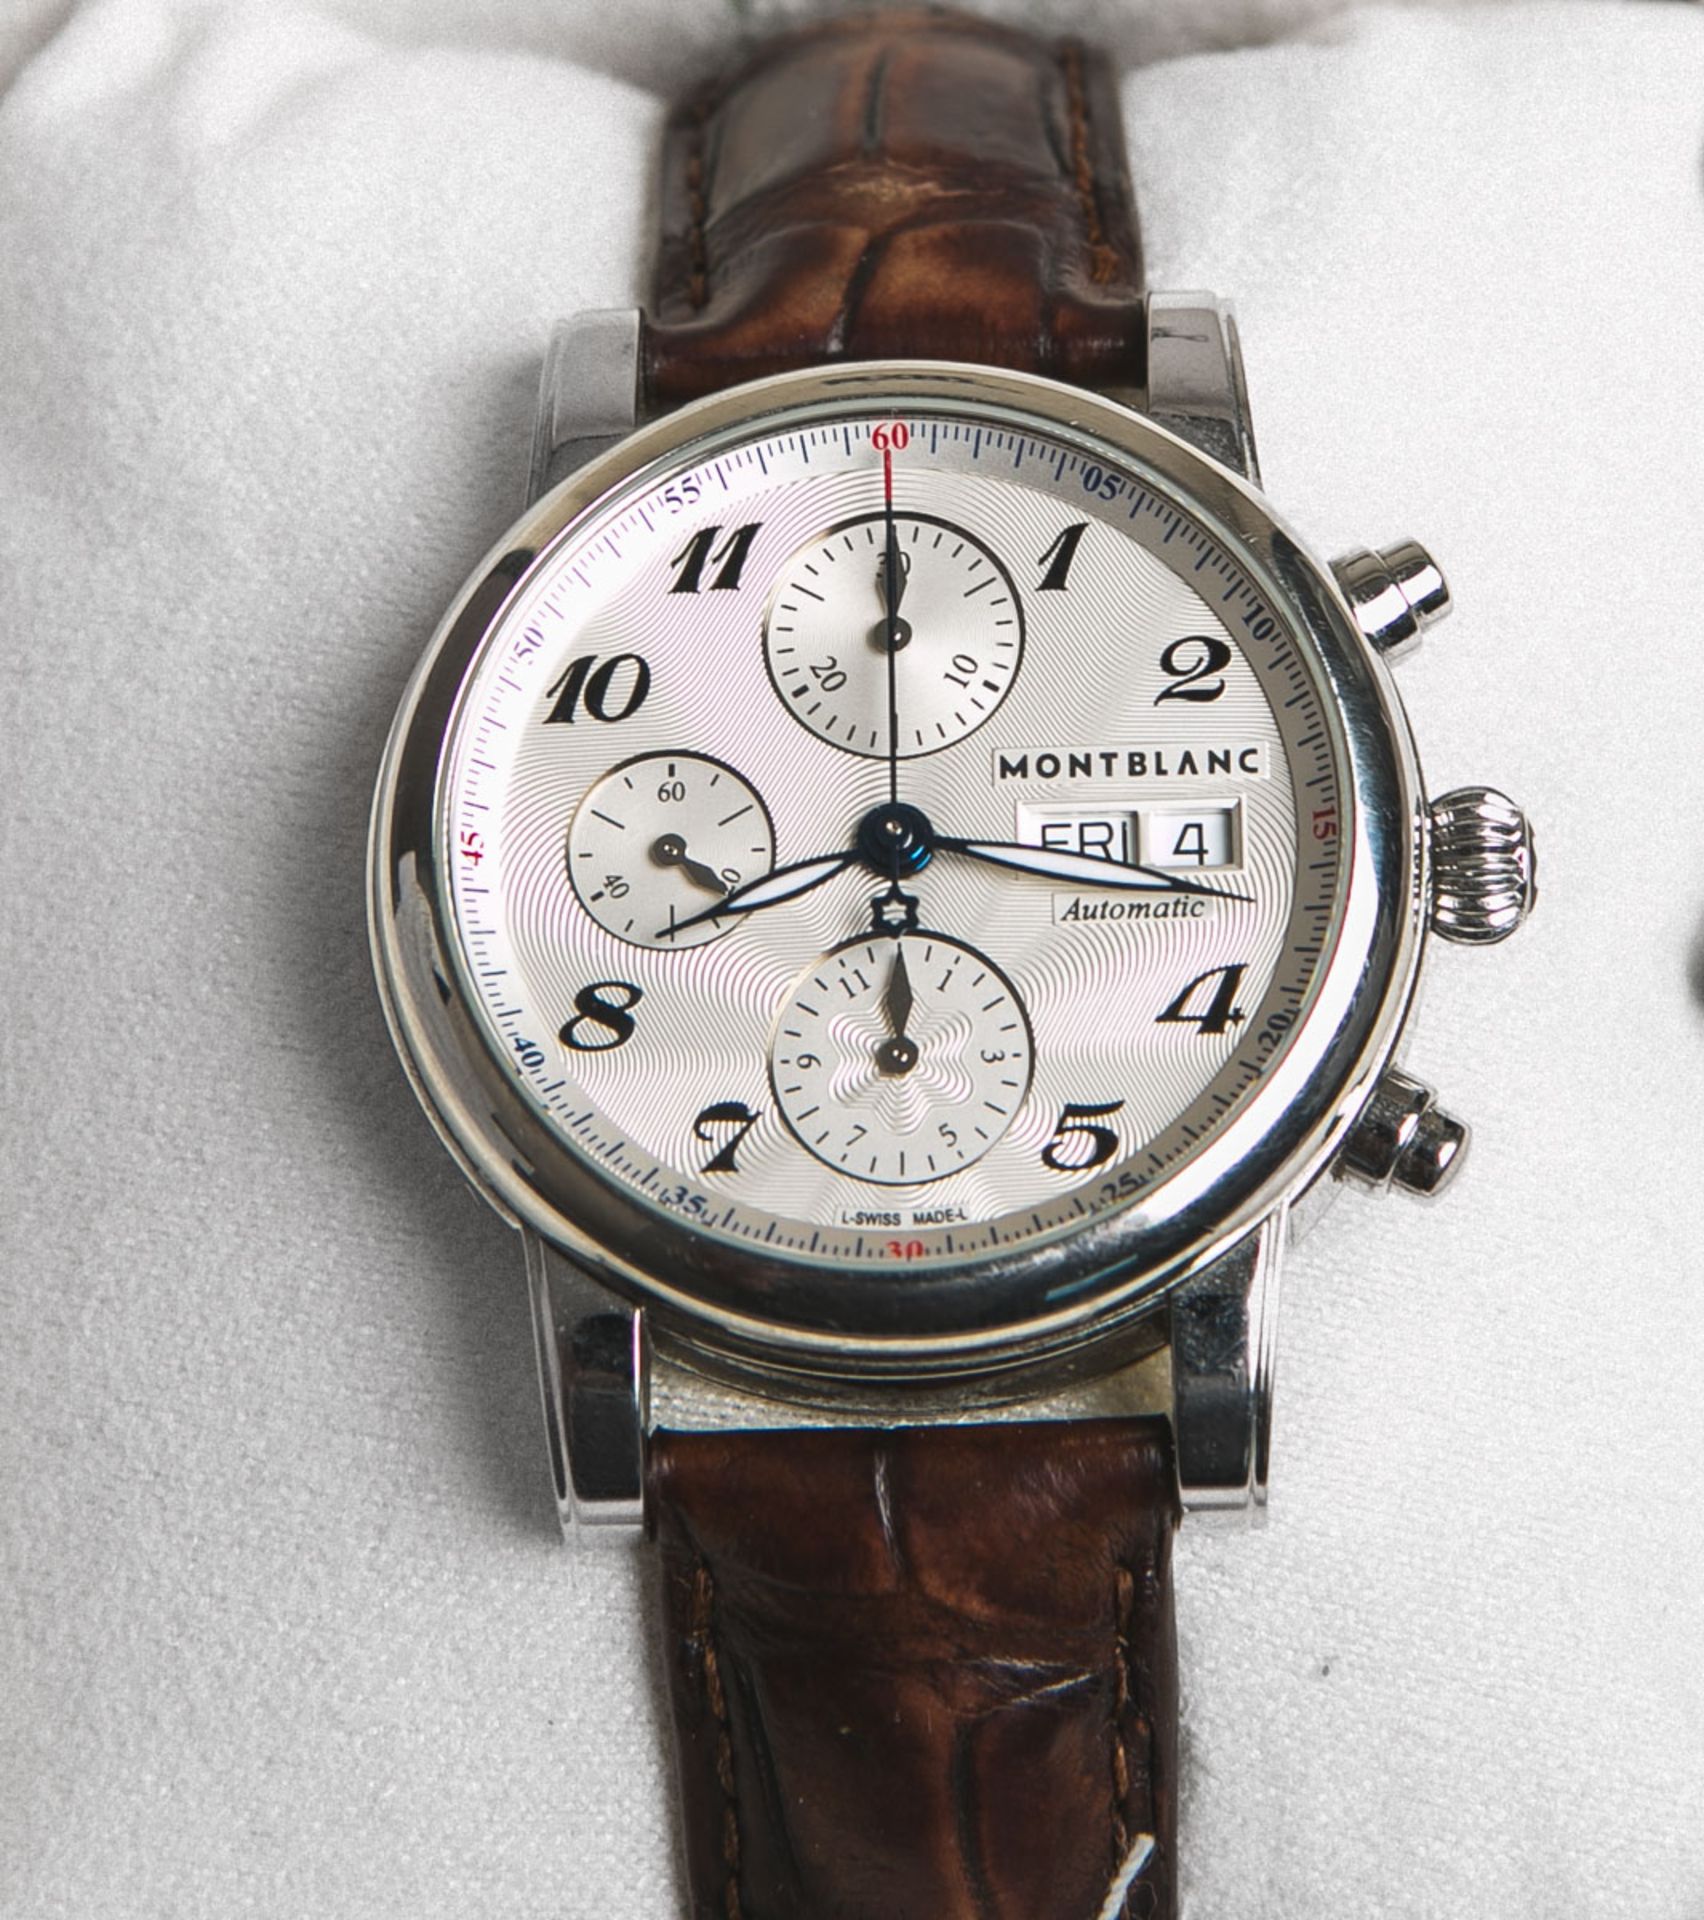 Montblanc - Herrenarmbanduhr "Armbandchronograph Serie Meisterstück" (um 2010)